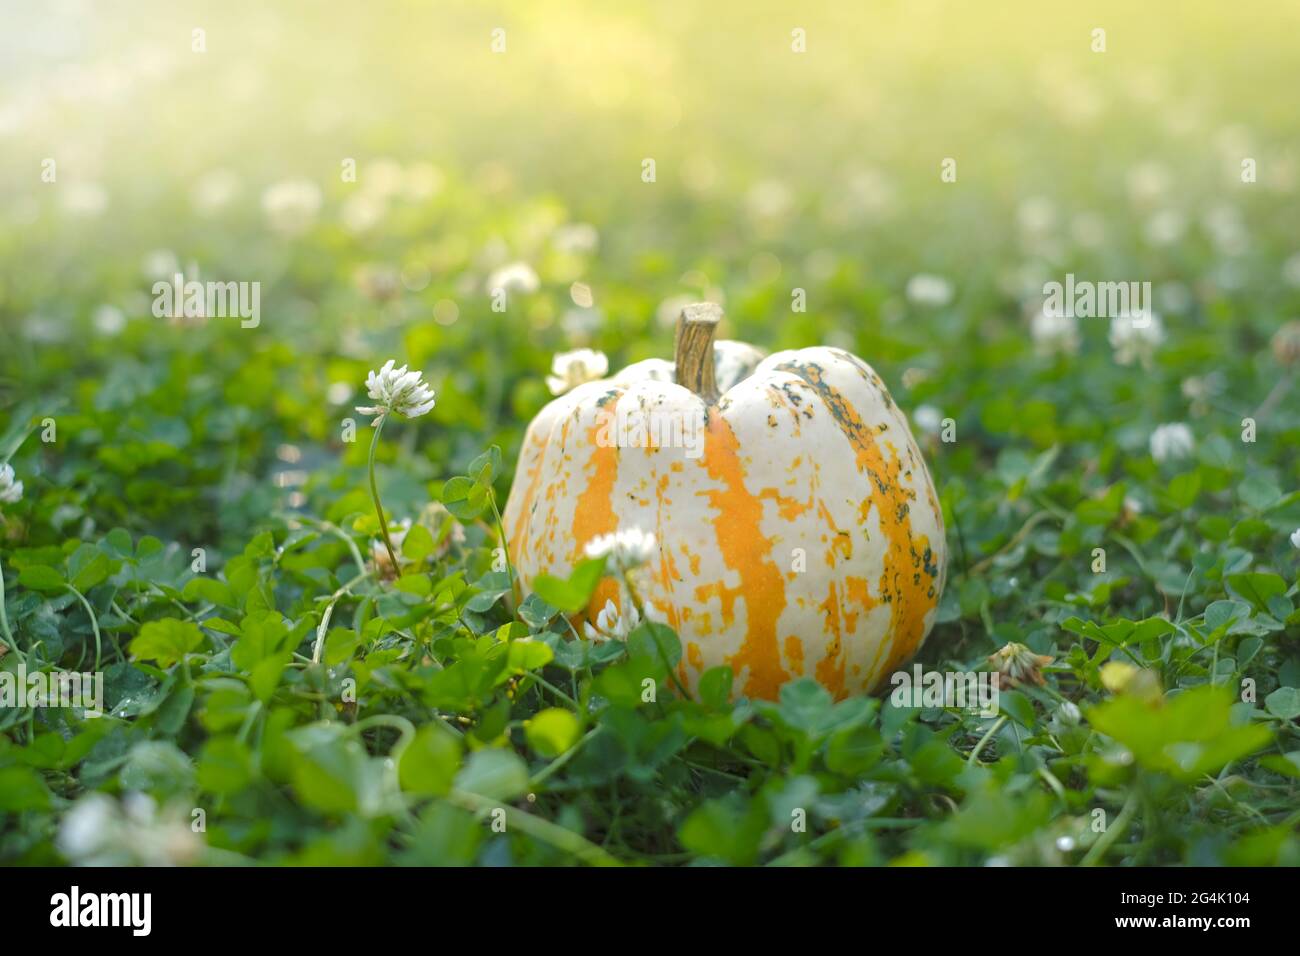 autumn season. pumpkin in blooming clover in the autumn garden. Pumpkin harvest.Farmed organic pure vegetables. Growing pumpkin. Stock Photo